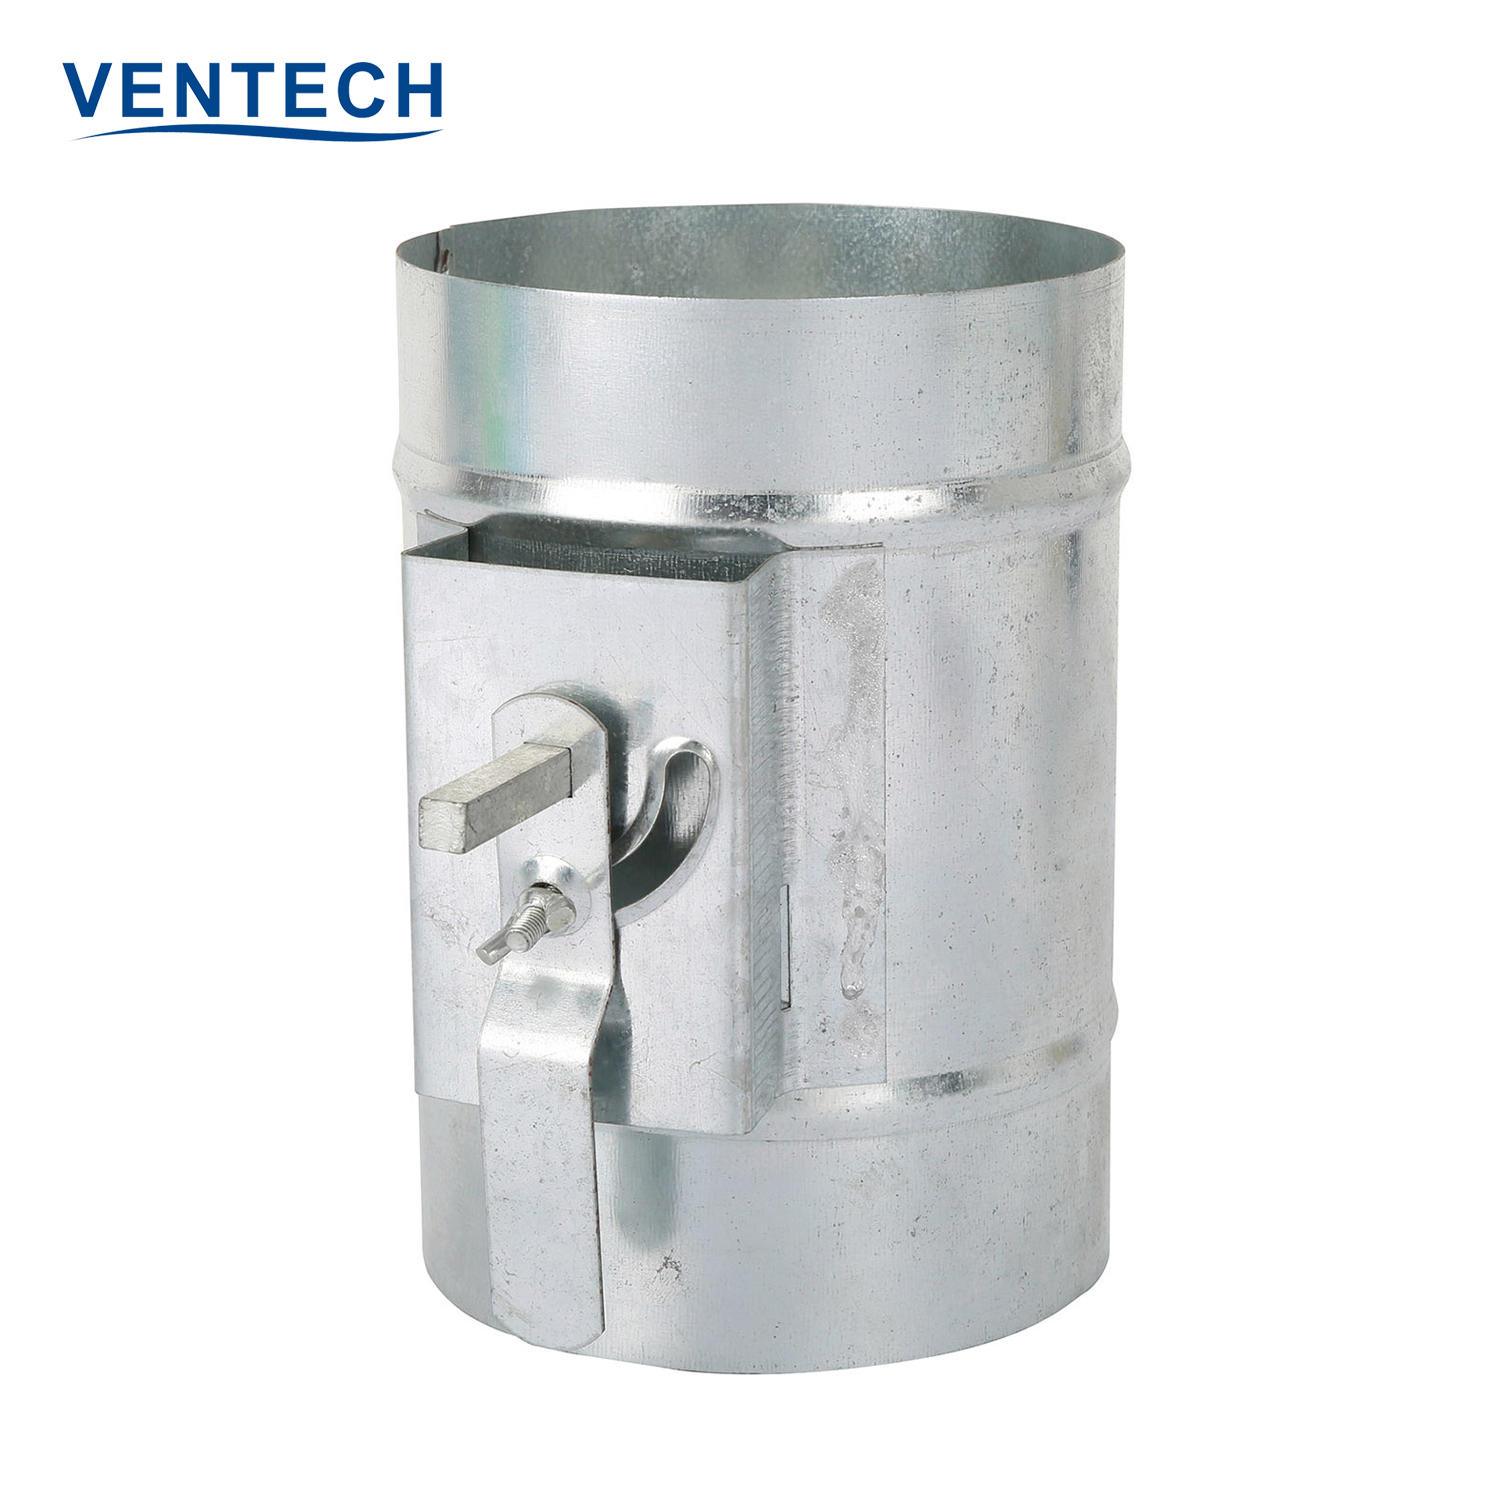 VENTECH Hvac High Quality Round Air Duct Volume Control Damper